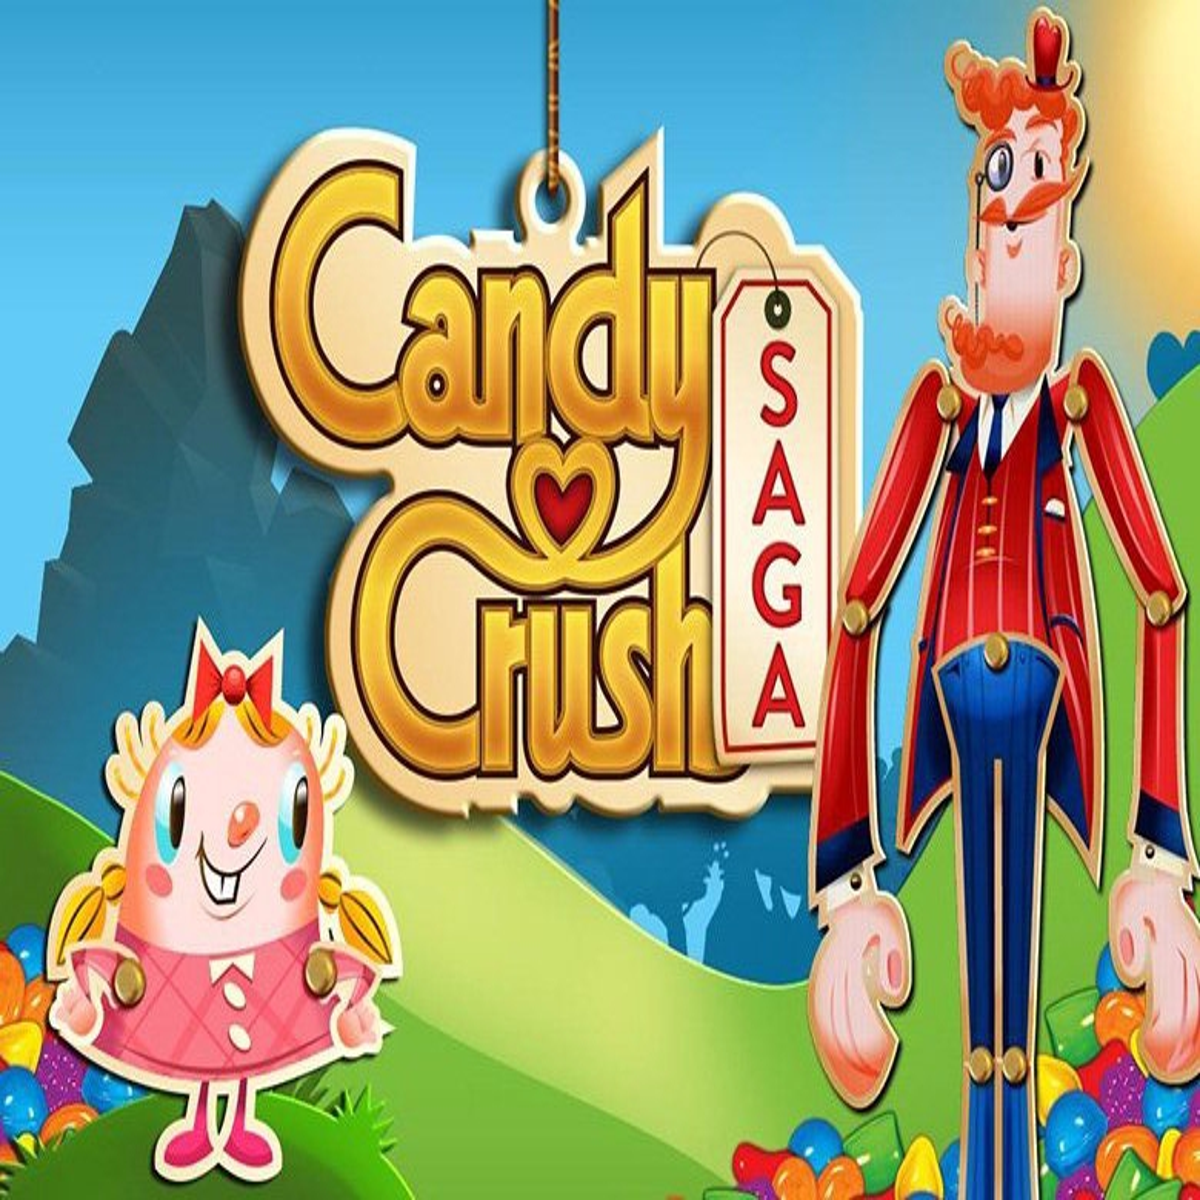 Candy Crush Soda Saga on PC Windows 7/8 or Mac - Andy - Android